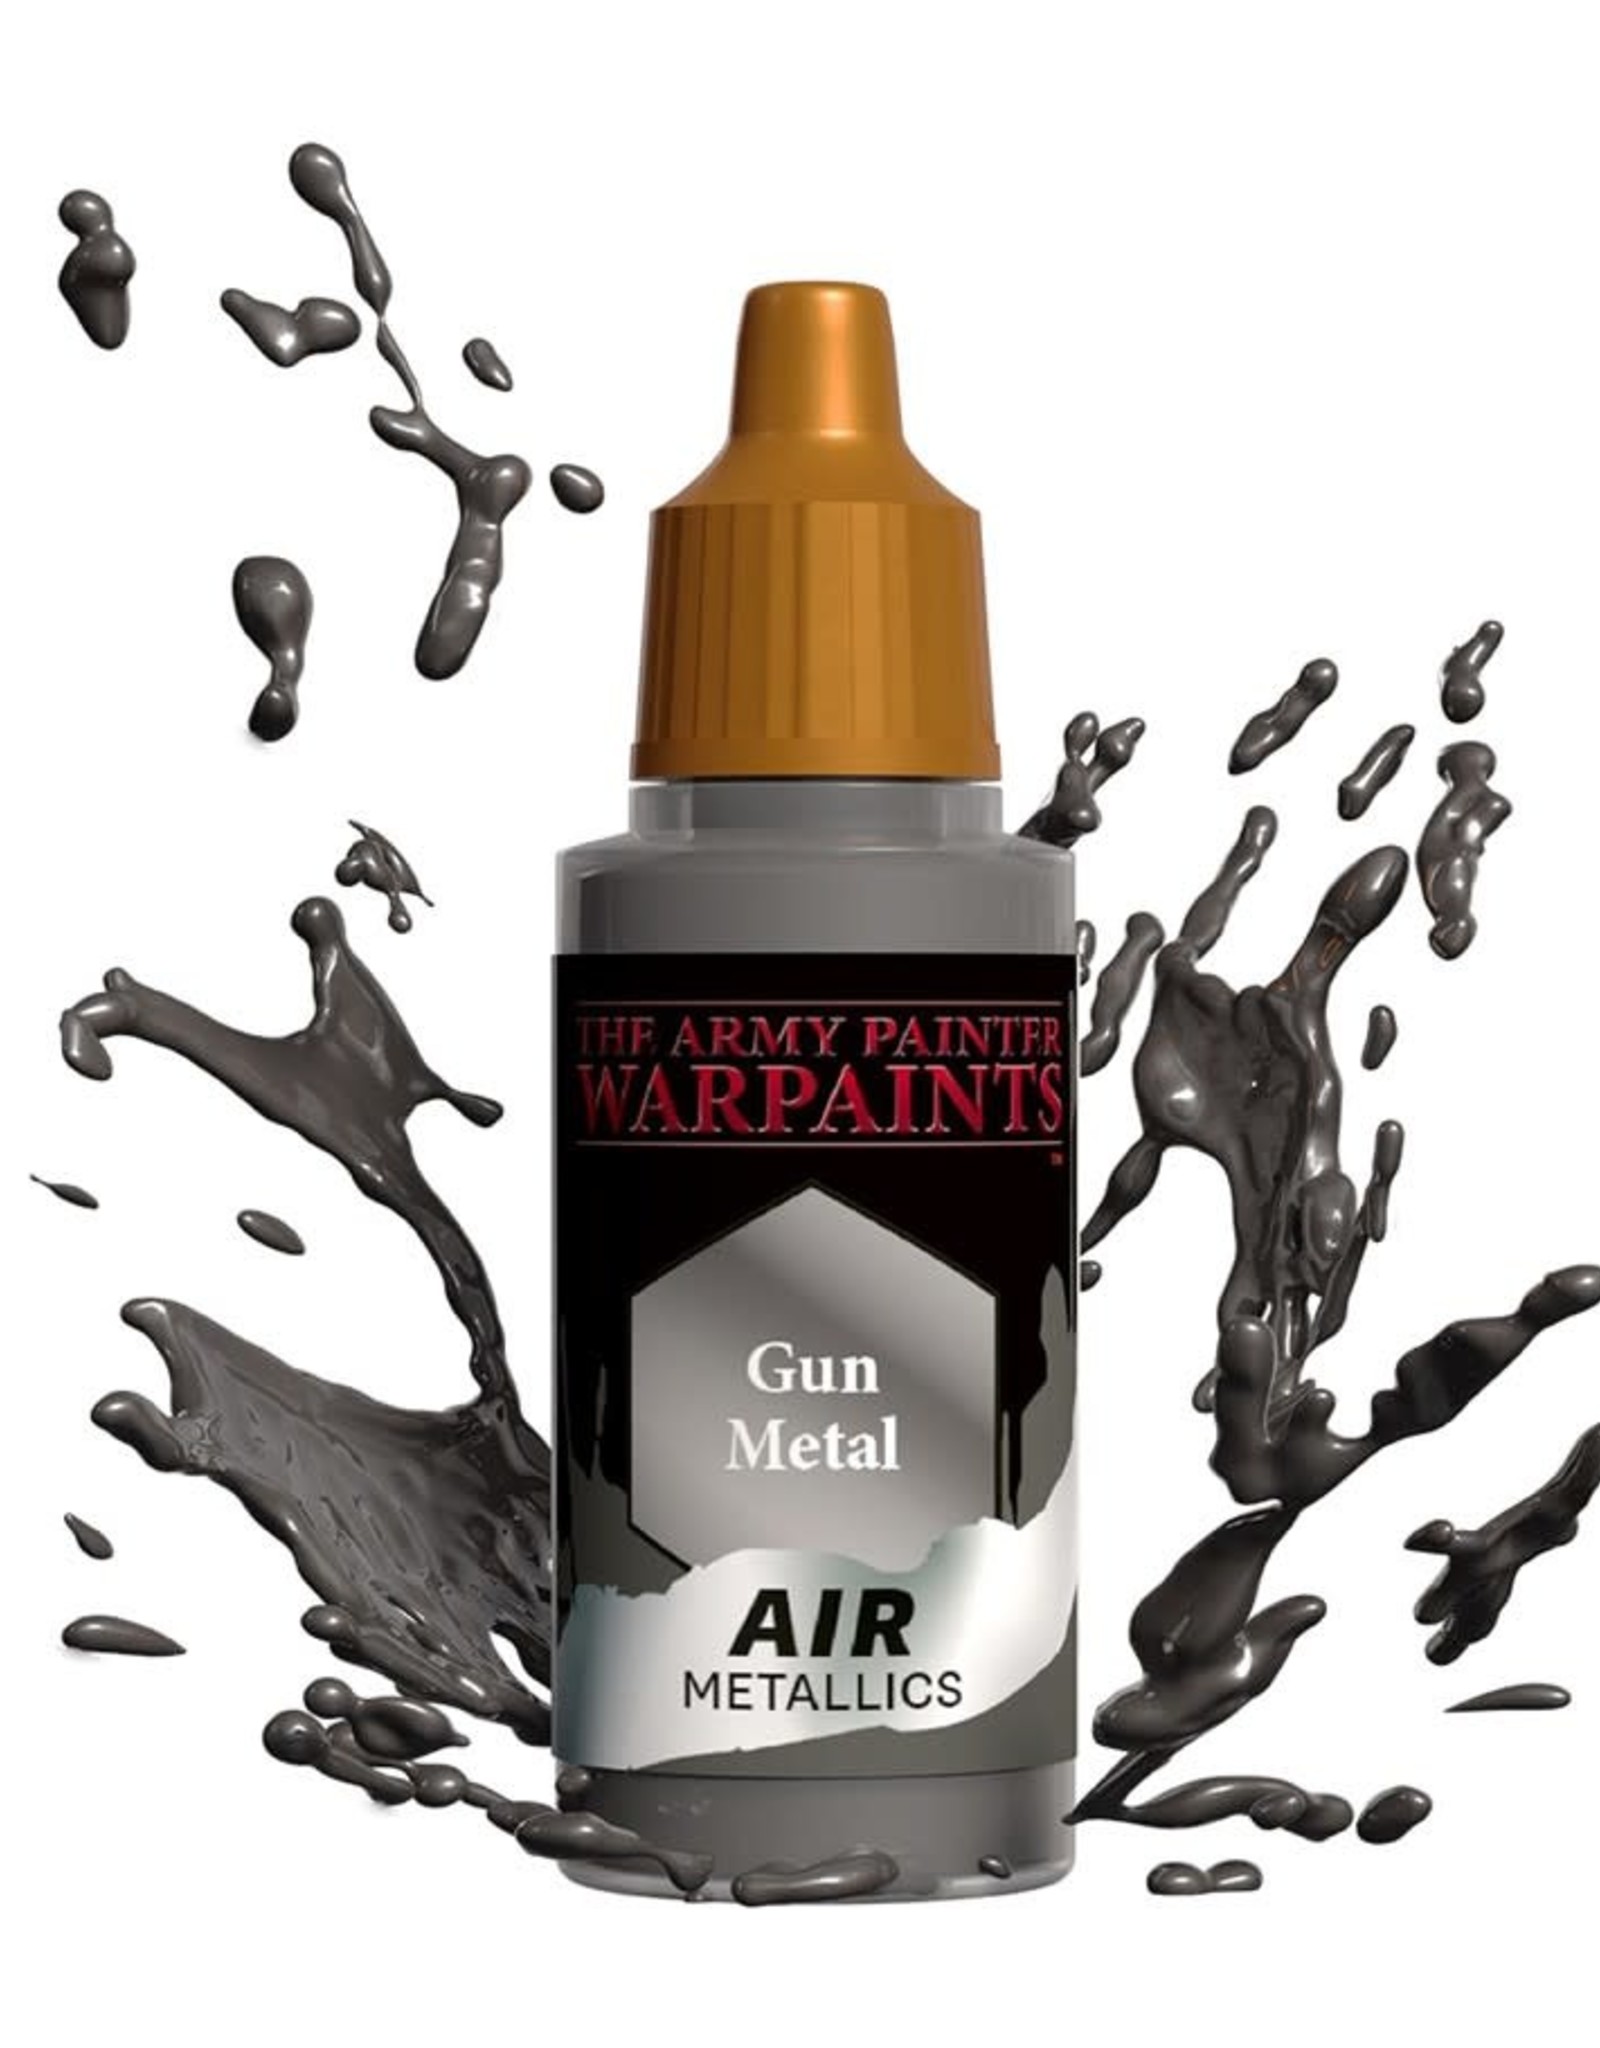 The Army Painter TAP Warpaints Air Metallics: Gun Metal